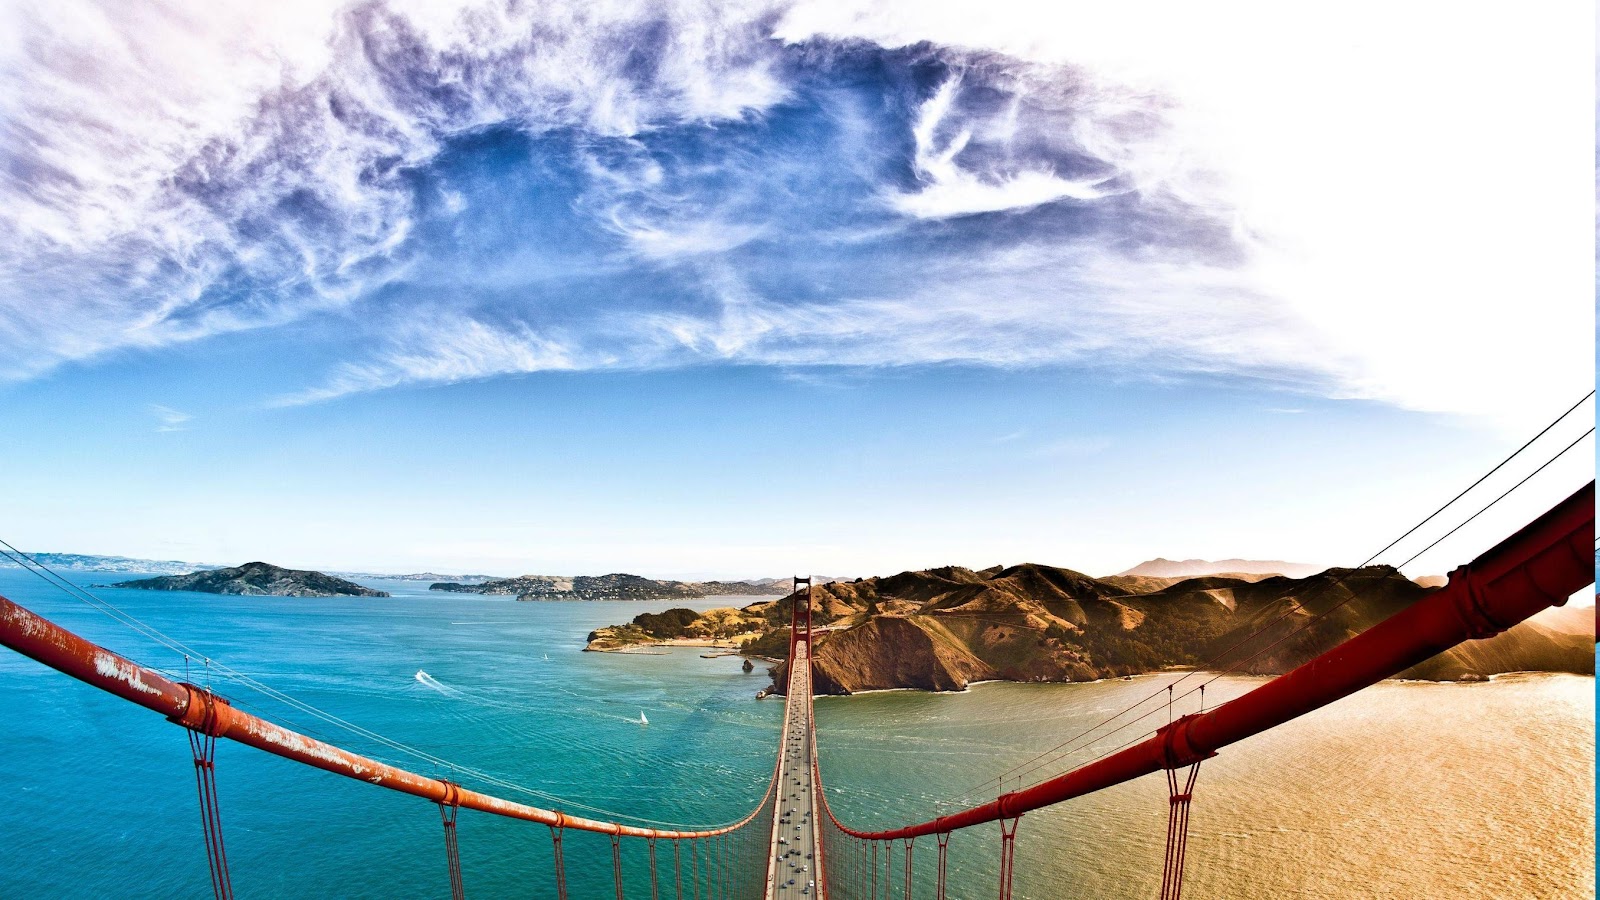 167699-nature-landscape-water-bridge-hill-trees-architecture-car-clouds-Golden_Gate_Bridge-San_Francisco_Bay-USA-bird039s_eye_view-top_view.jpg